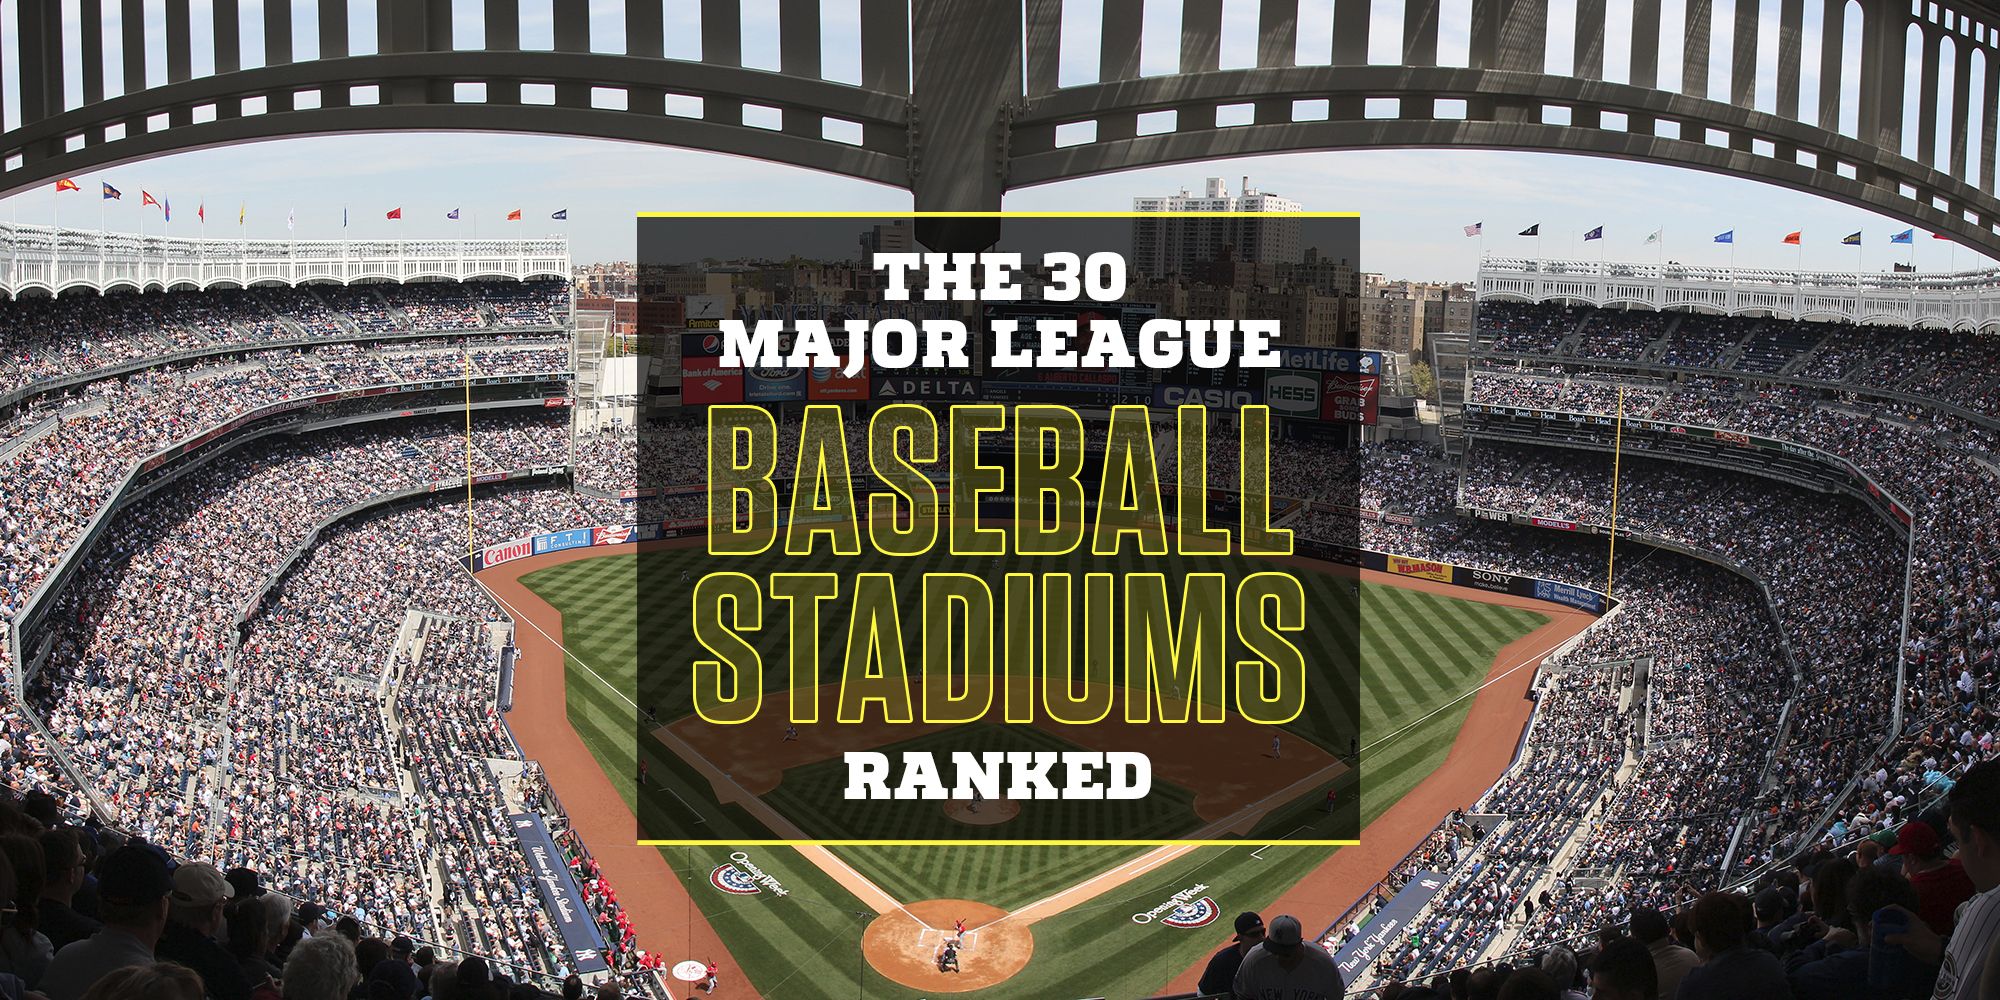 The 30 Major League Baseball Stadiums Ranked